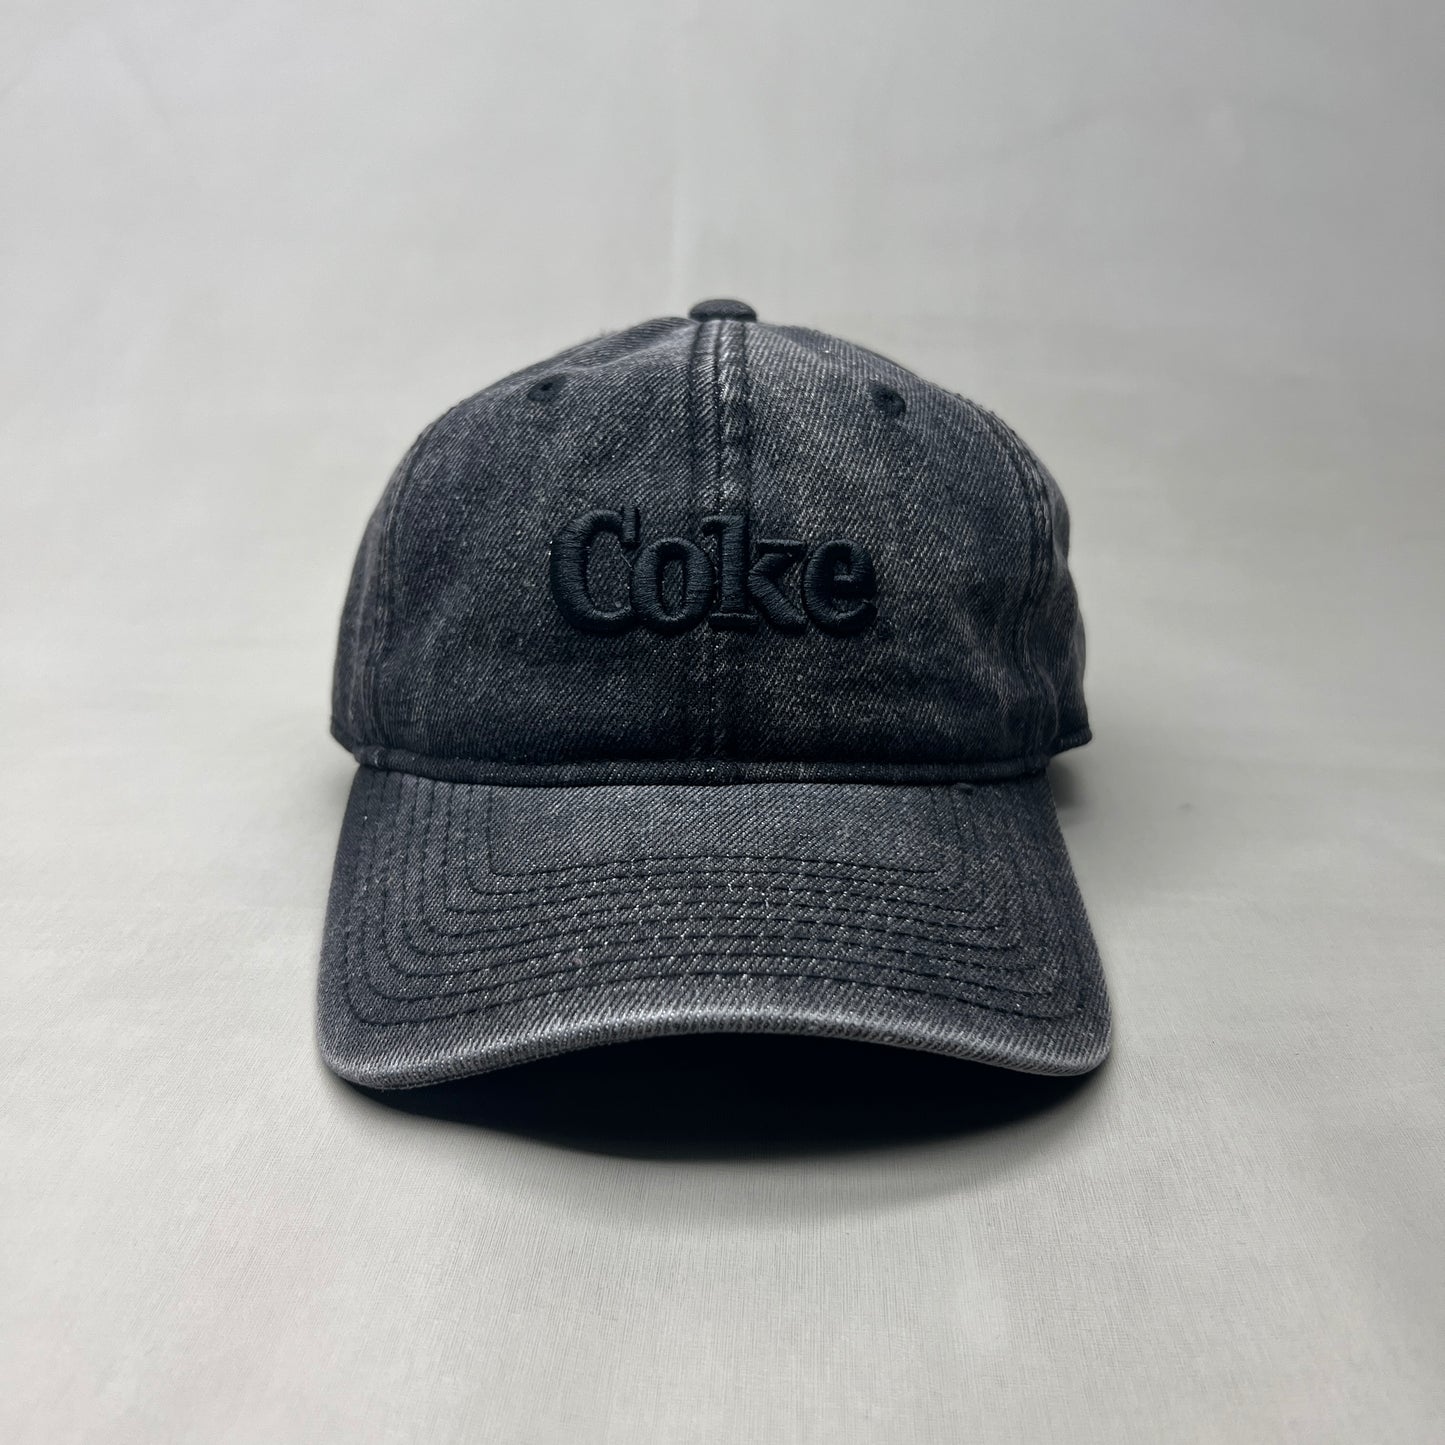 COCA-COLA Baseball Cap Strap Back Sz One Size Black 23635 (New)